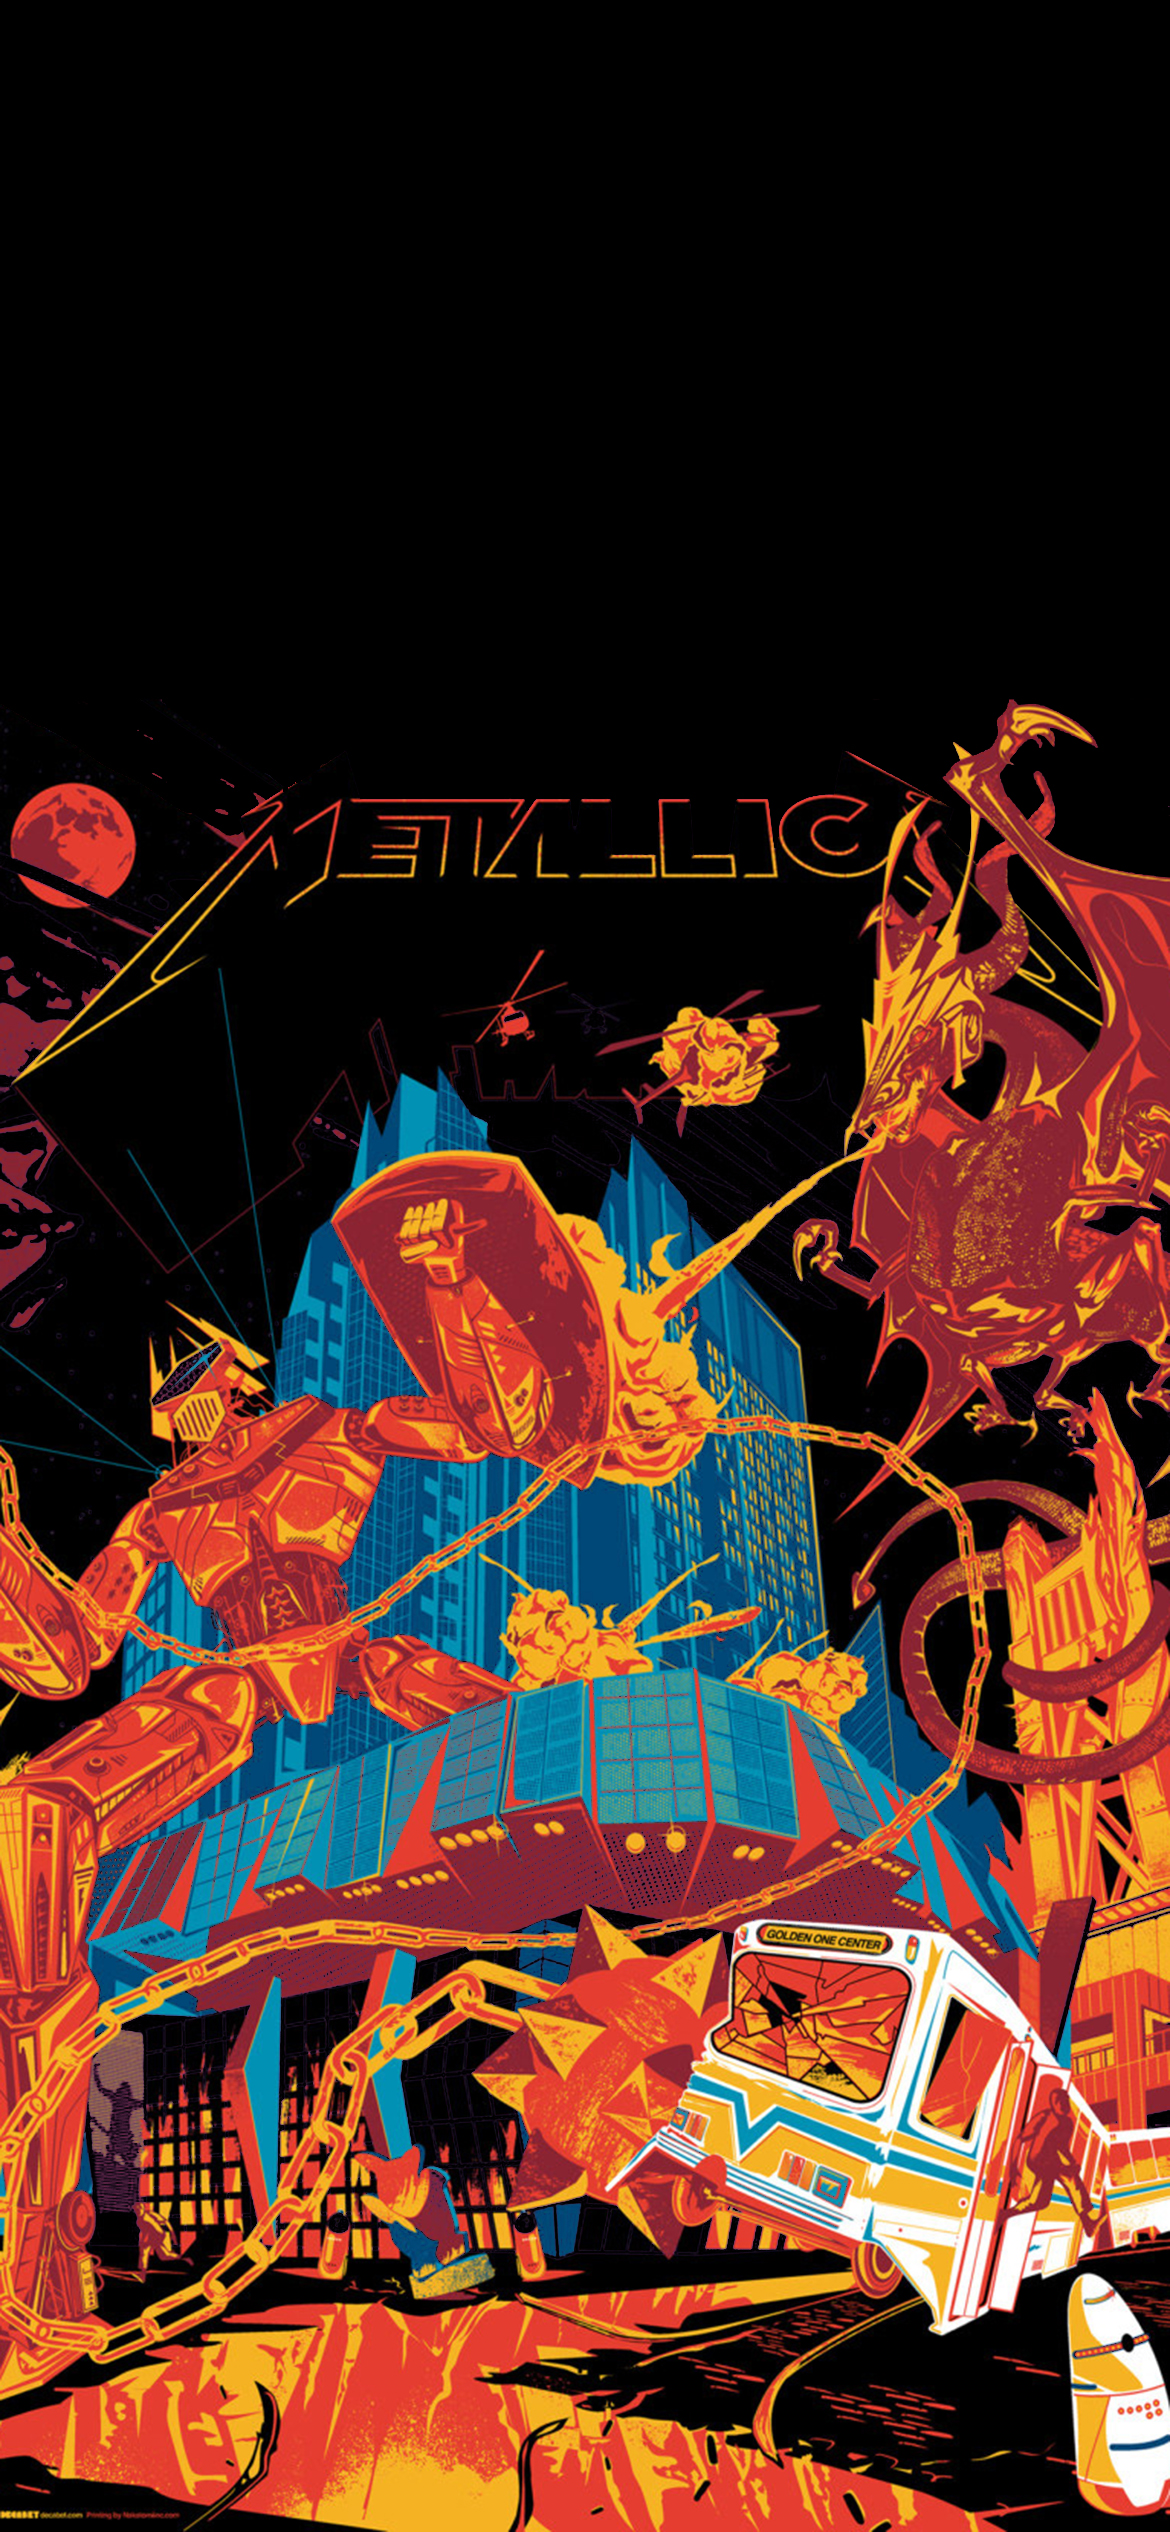 Metallica phone wallpaper by me by JaybolDesigns on DeviantArt